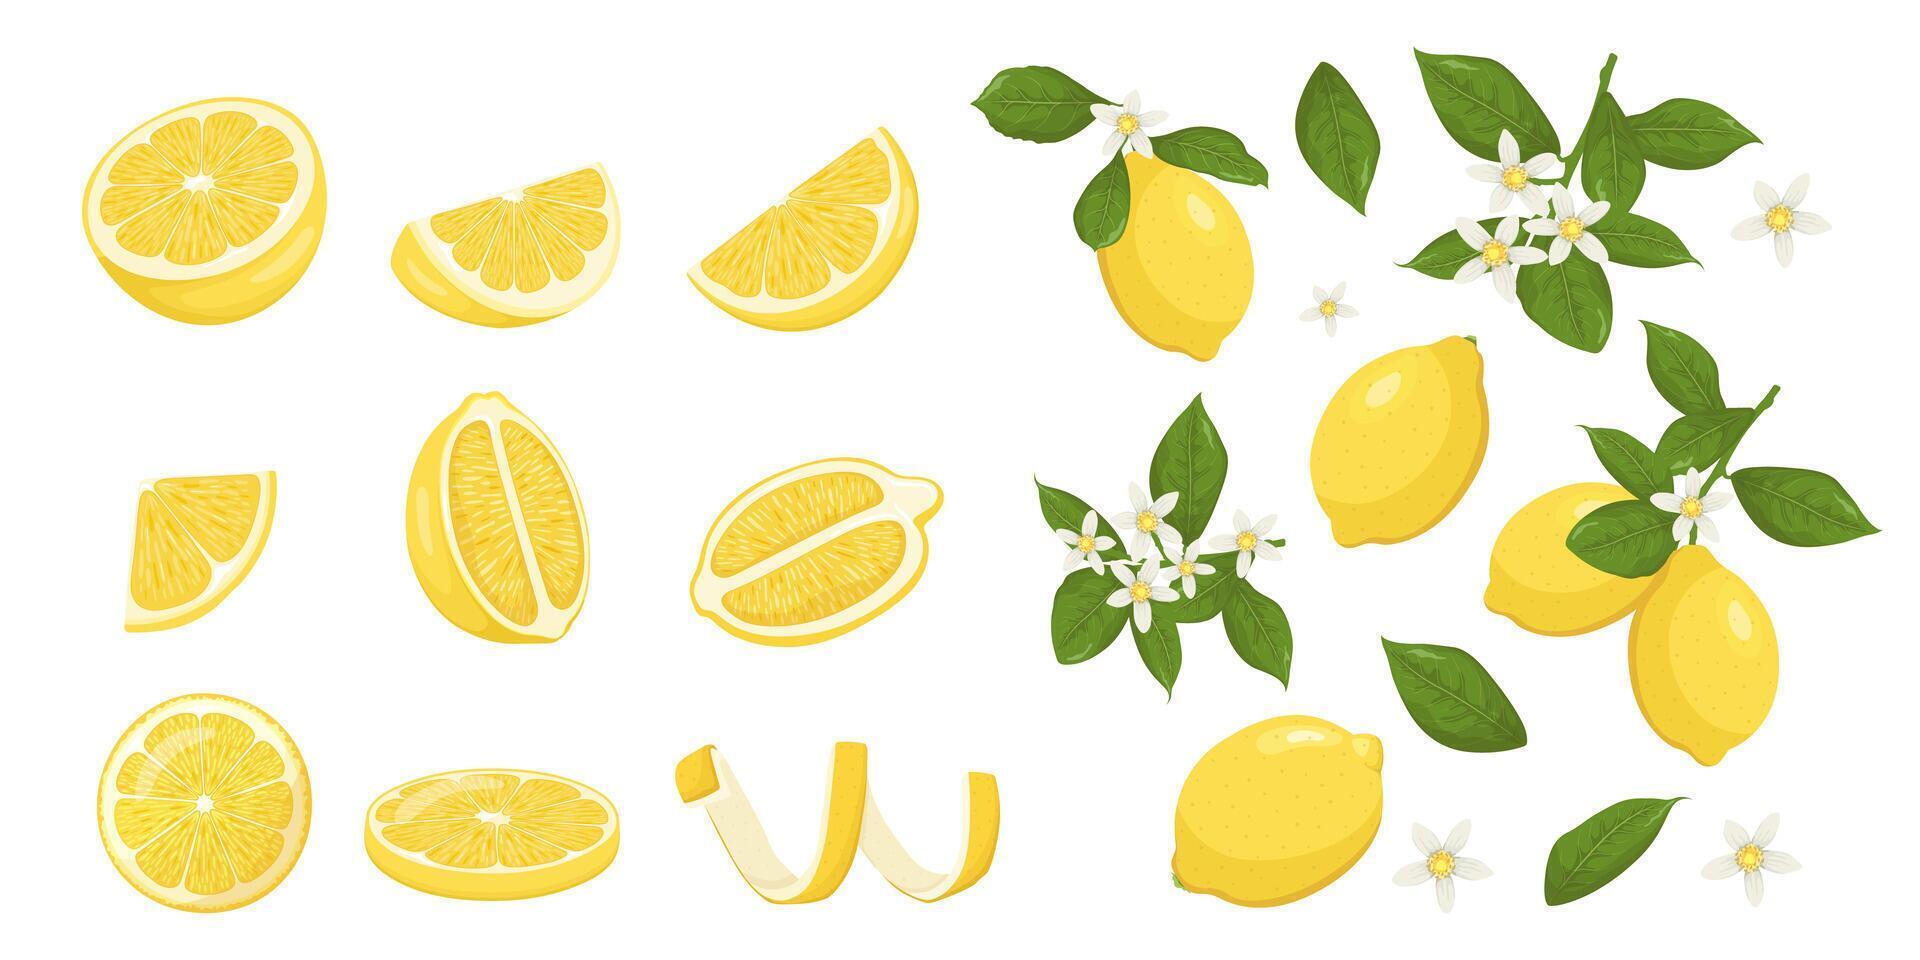 Whole lemon, slices lemon and blossom lemon vector